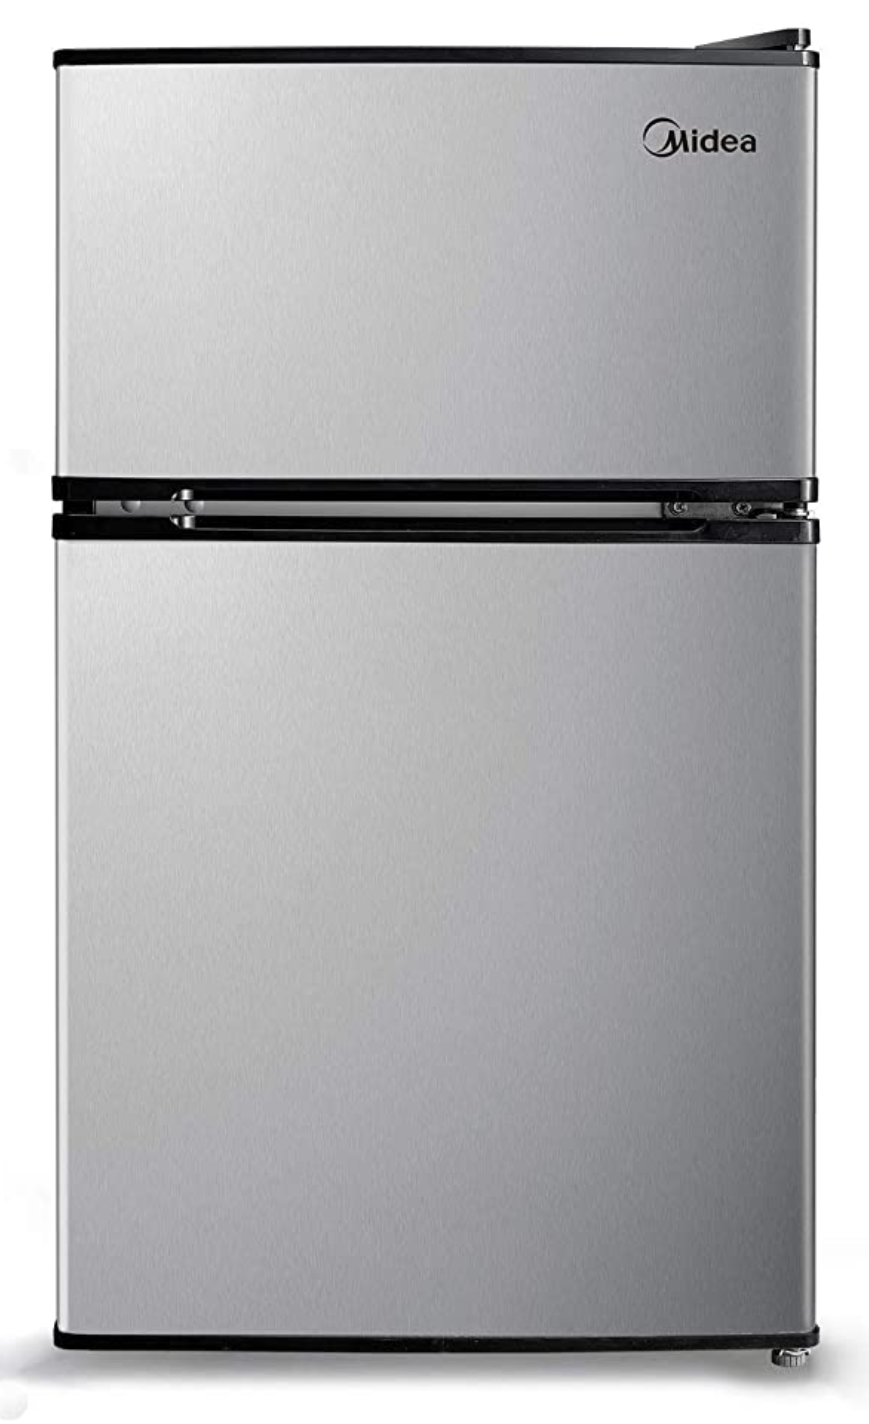 Midea counter depth refrigerator